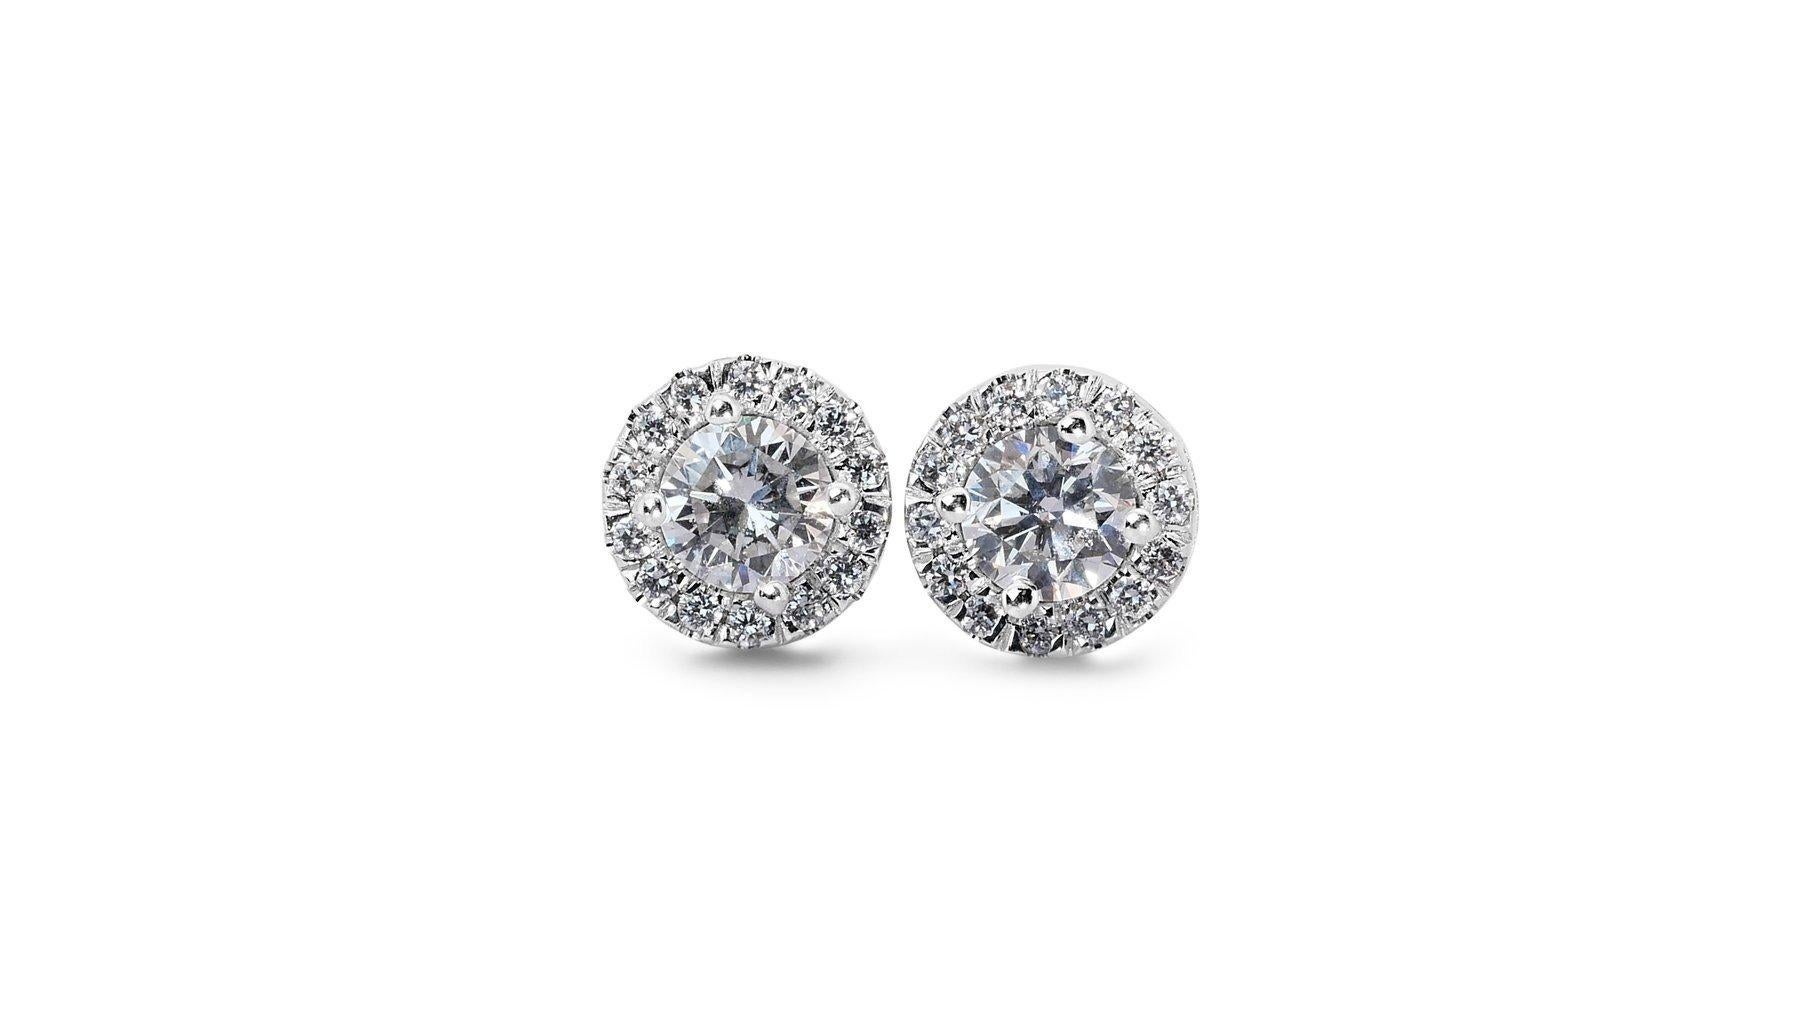 Elegant 1.68ct Diamond Halo Stud Earrings in 18k White Gold - GIA Certified For Sale 3